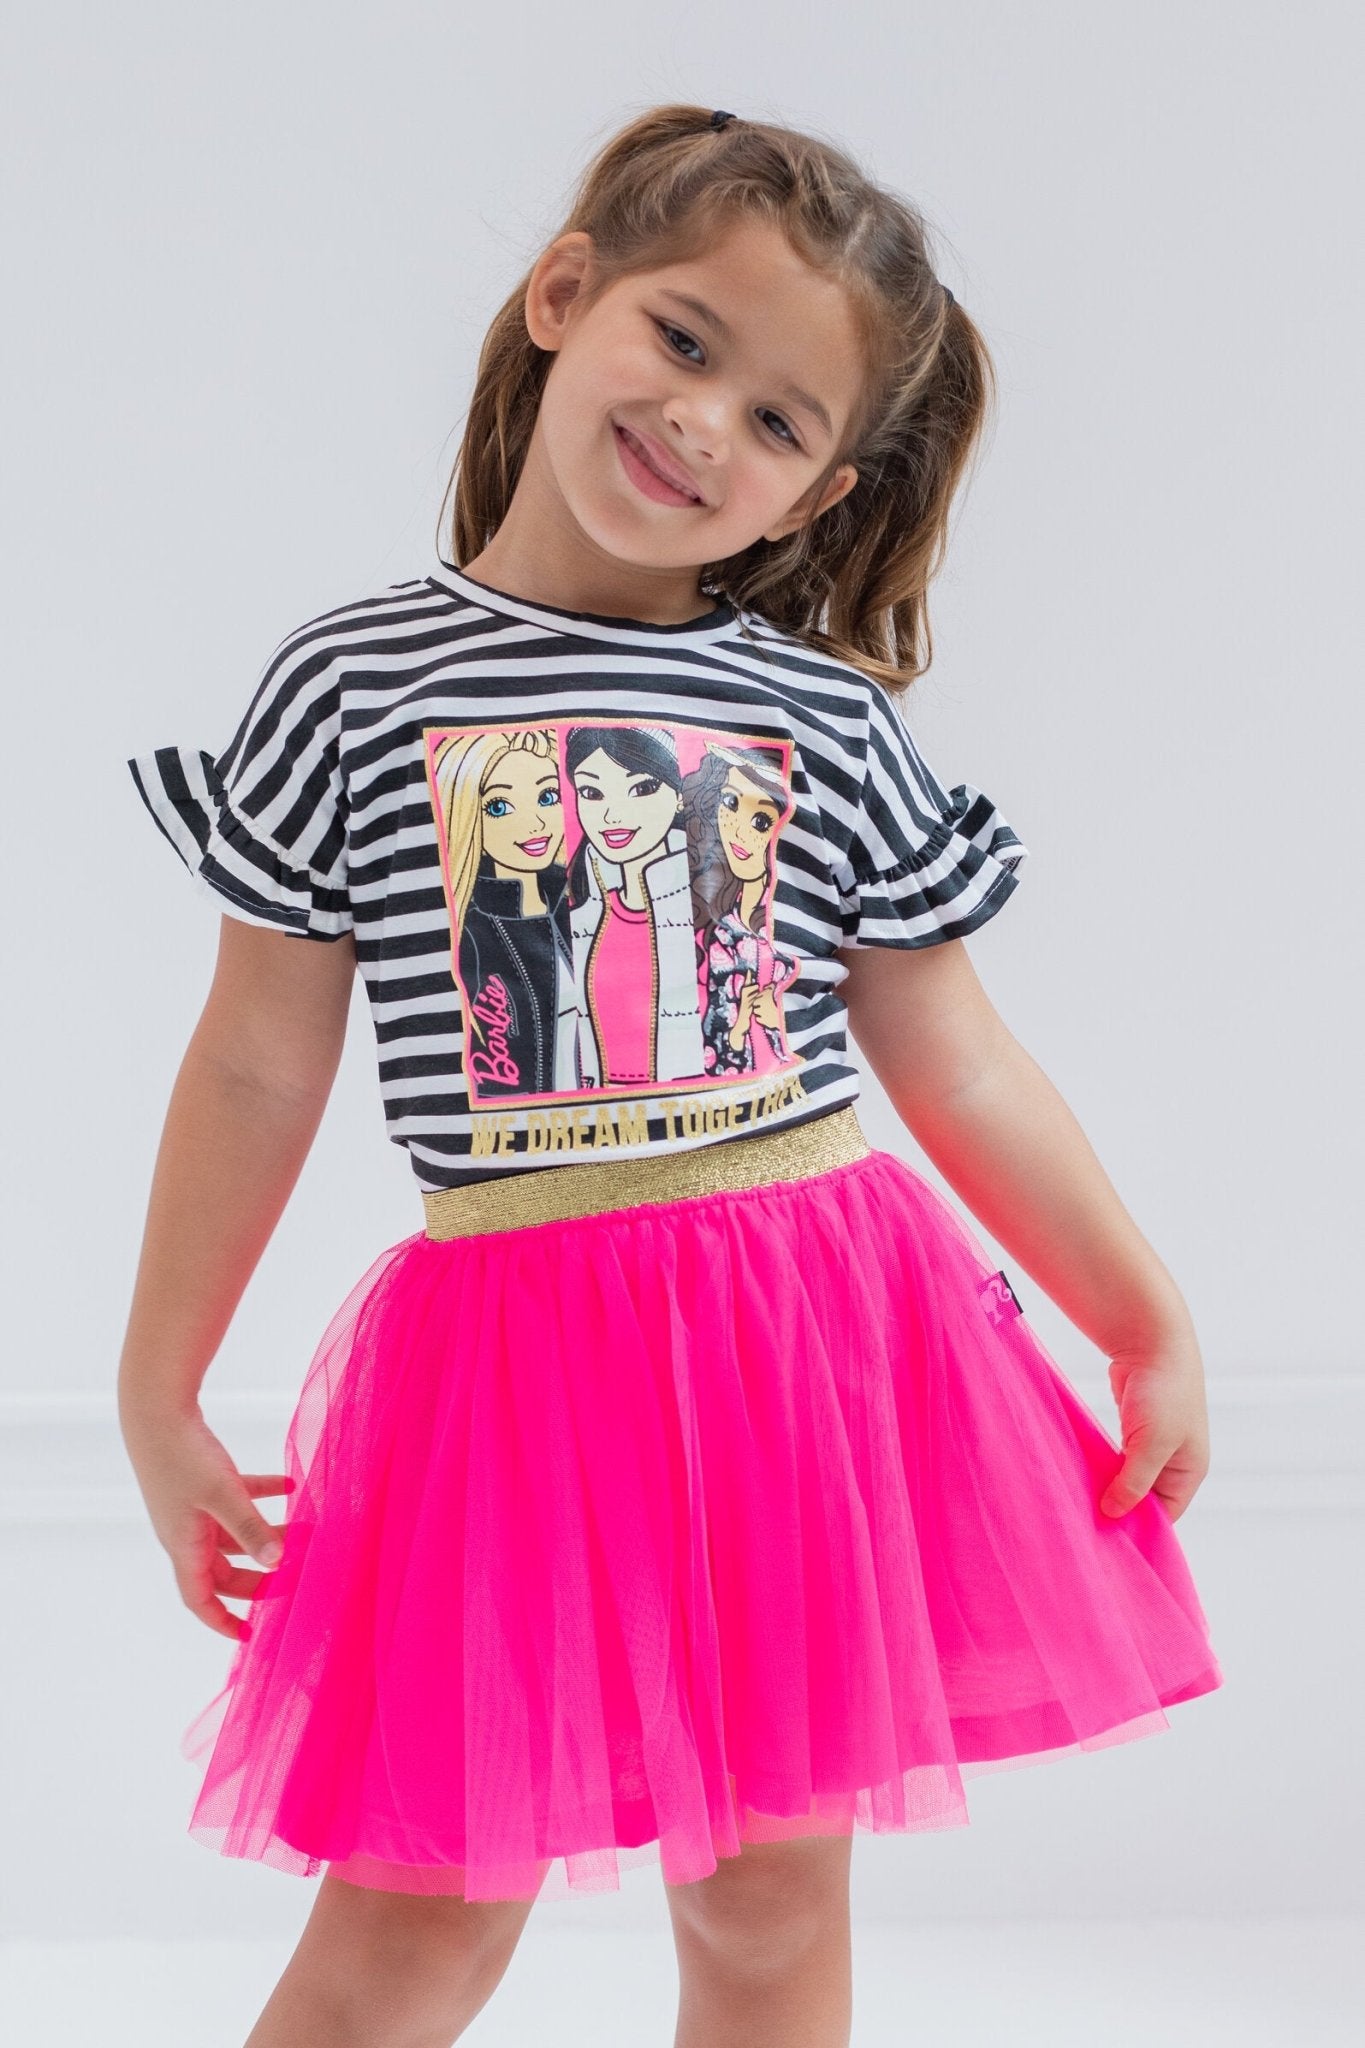 Barbie T-Shirt and Mesh Tutu - imagikids